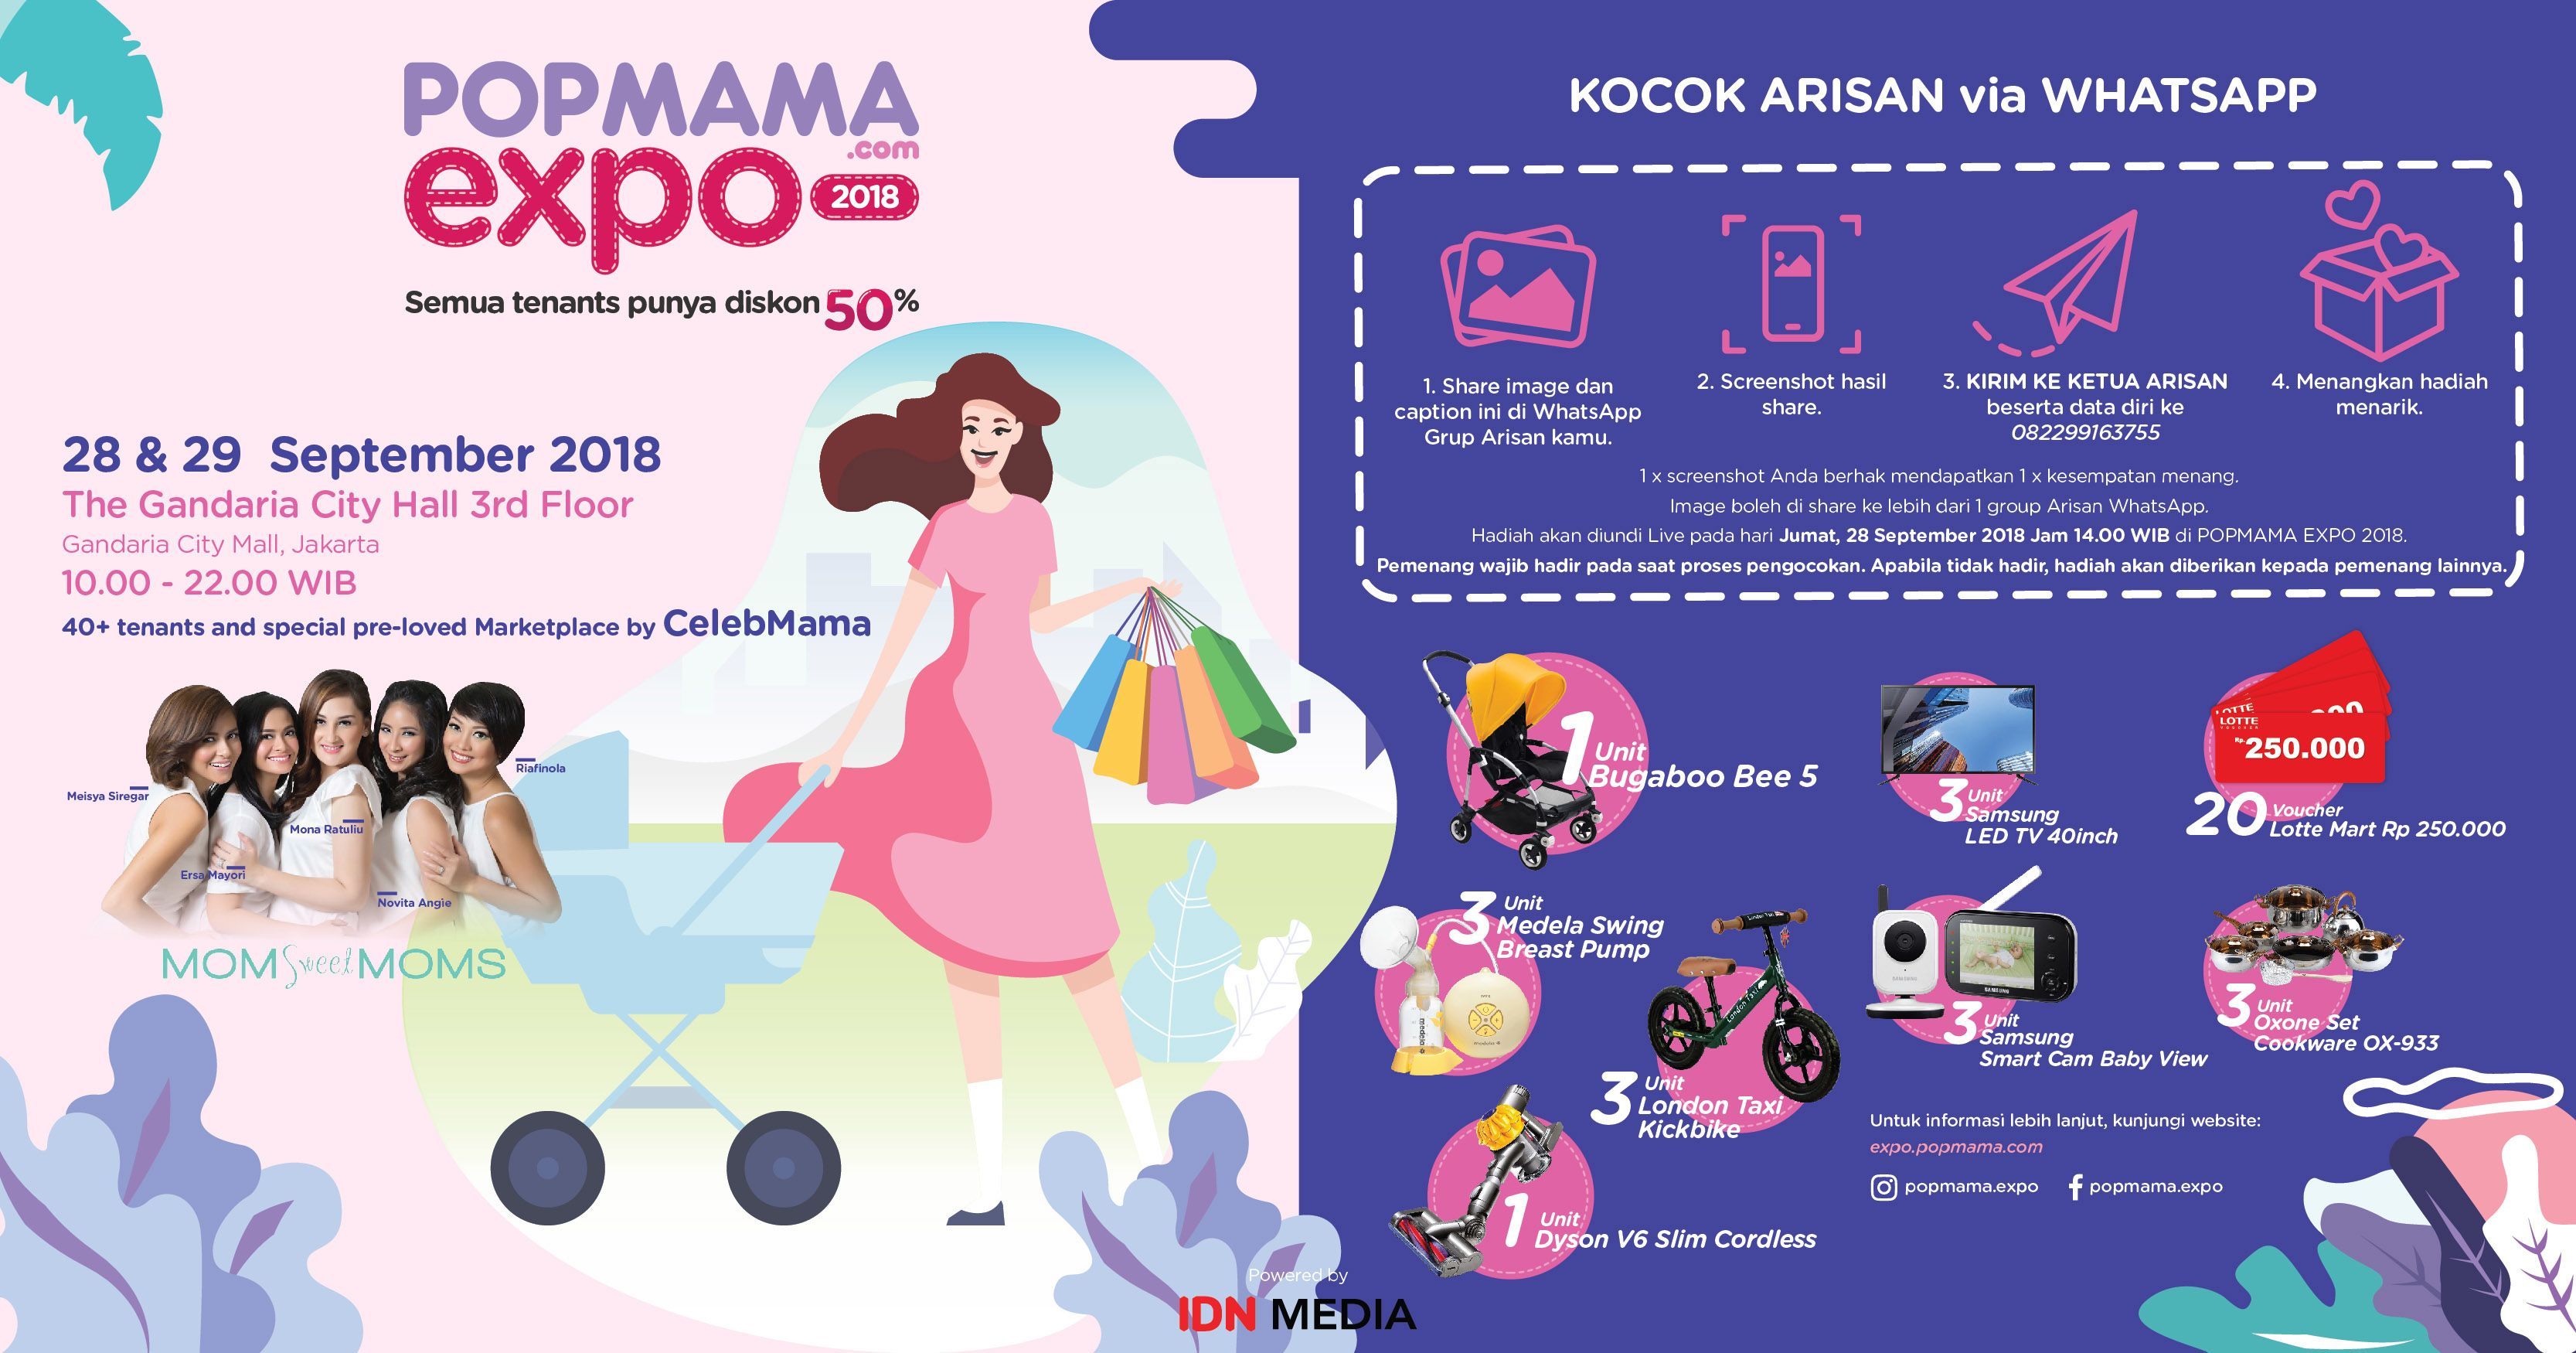 6. Belanja Popmama Expo 2018 karena banyak diskon